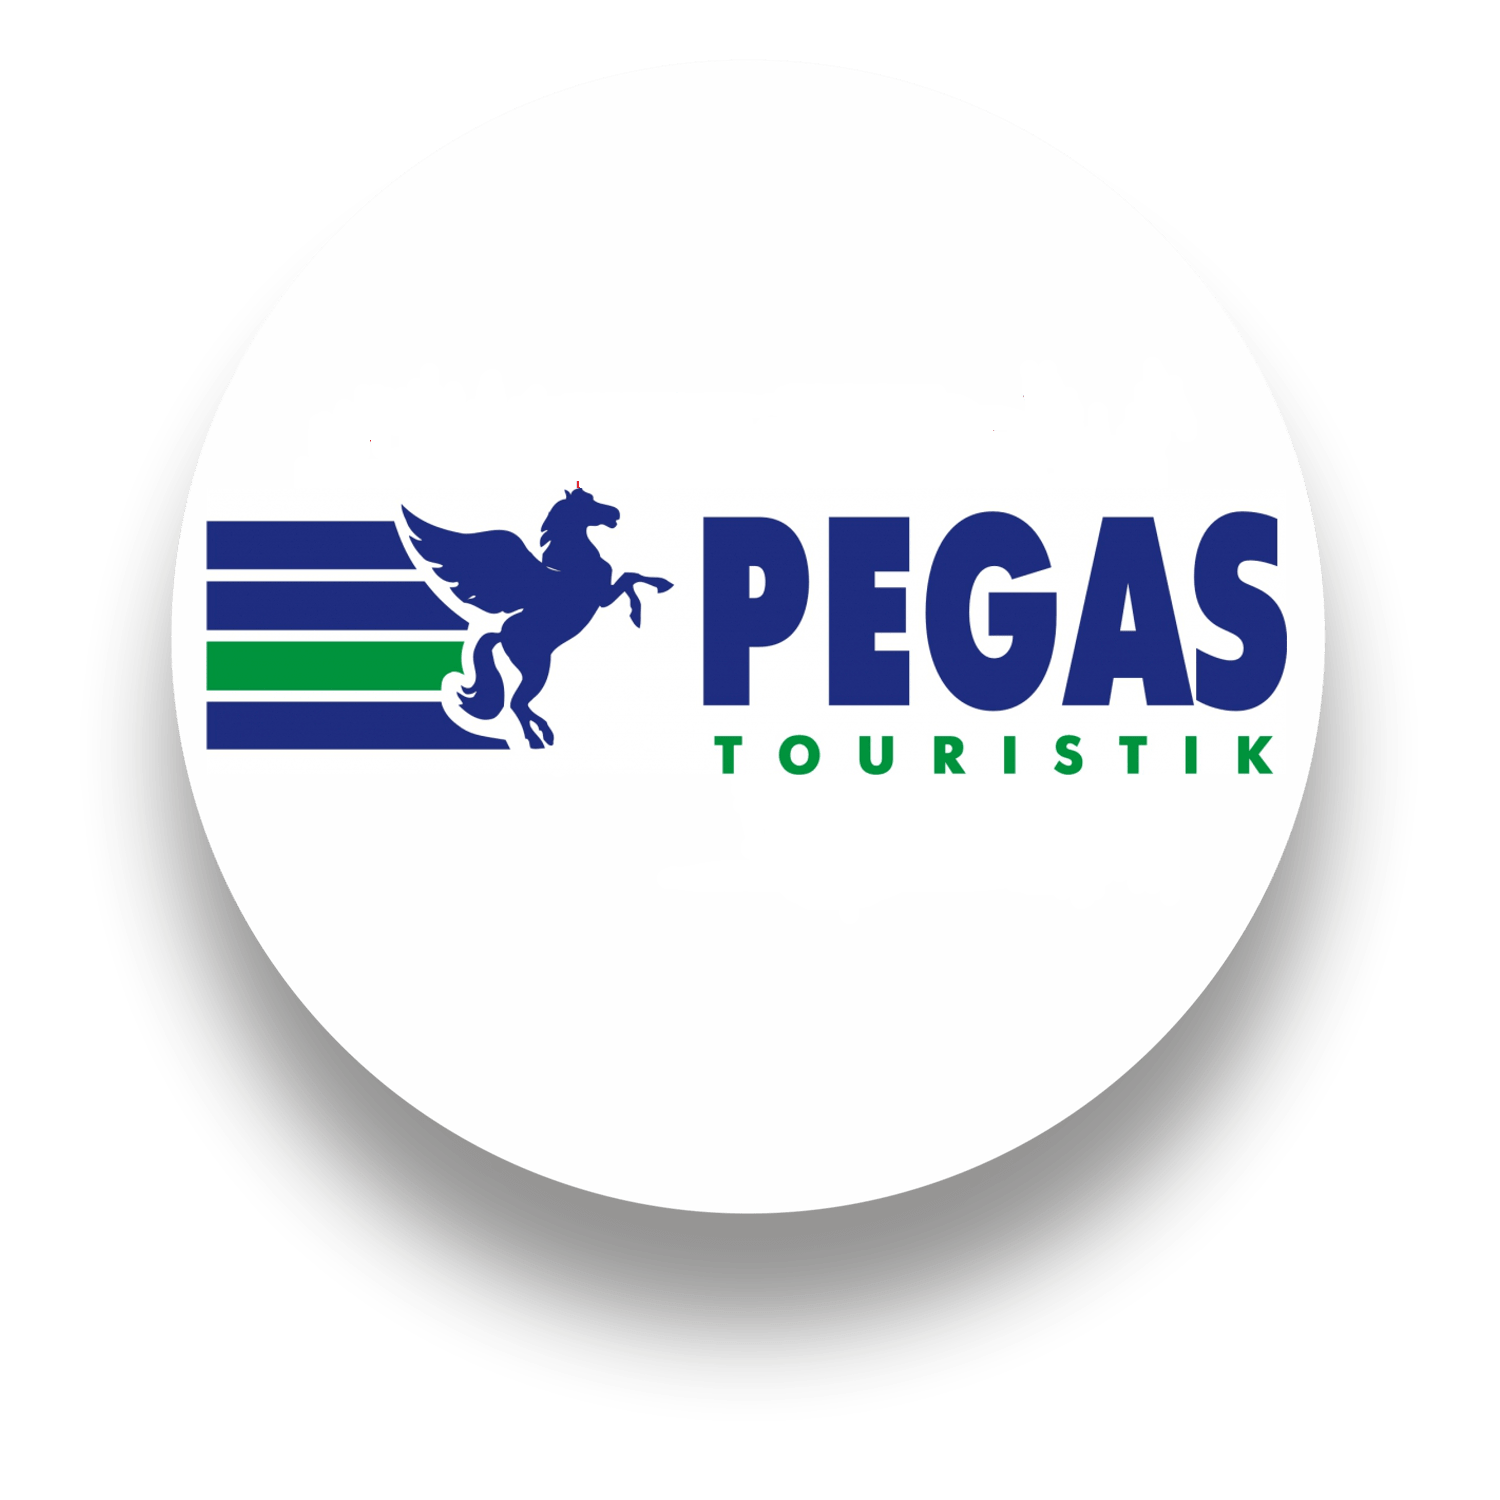 Пегас туристик омск. Pegas логотип. Пегас Туристик лого. Турфирма Пегас. Туристическая фирма Пегас.